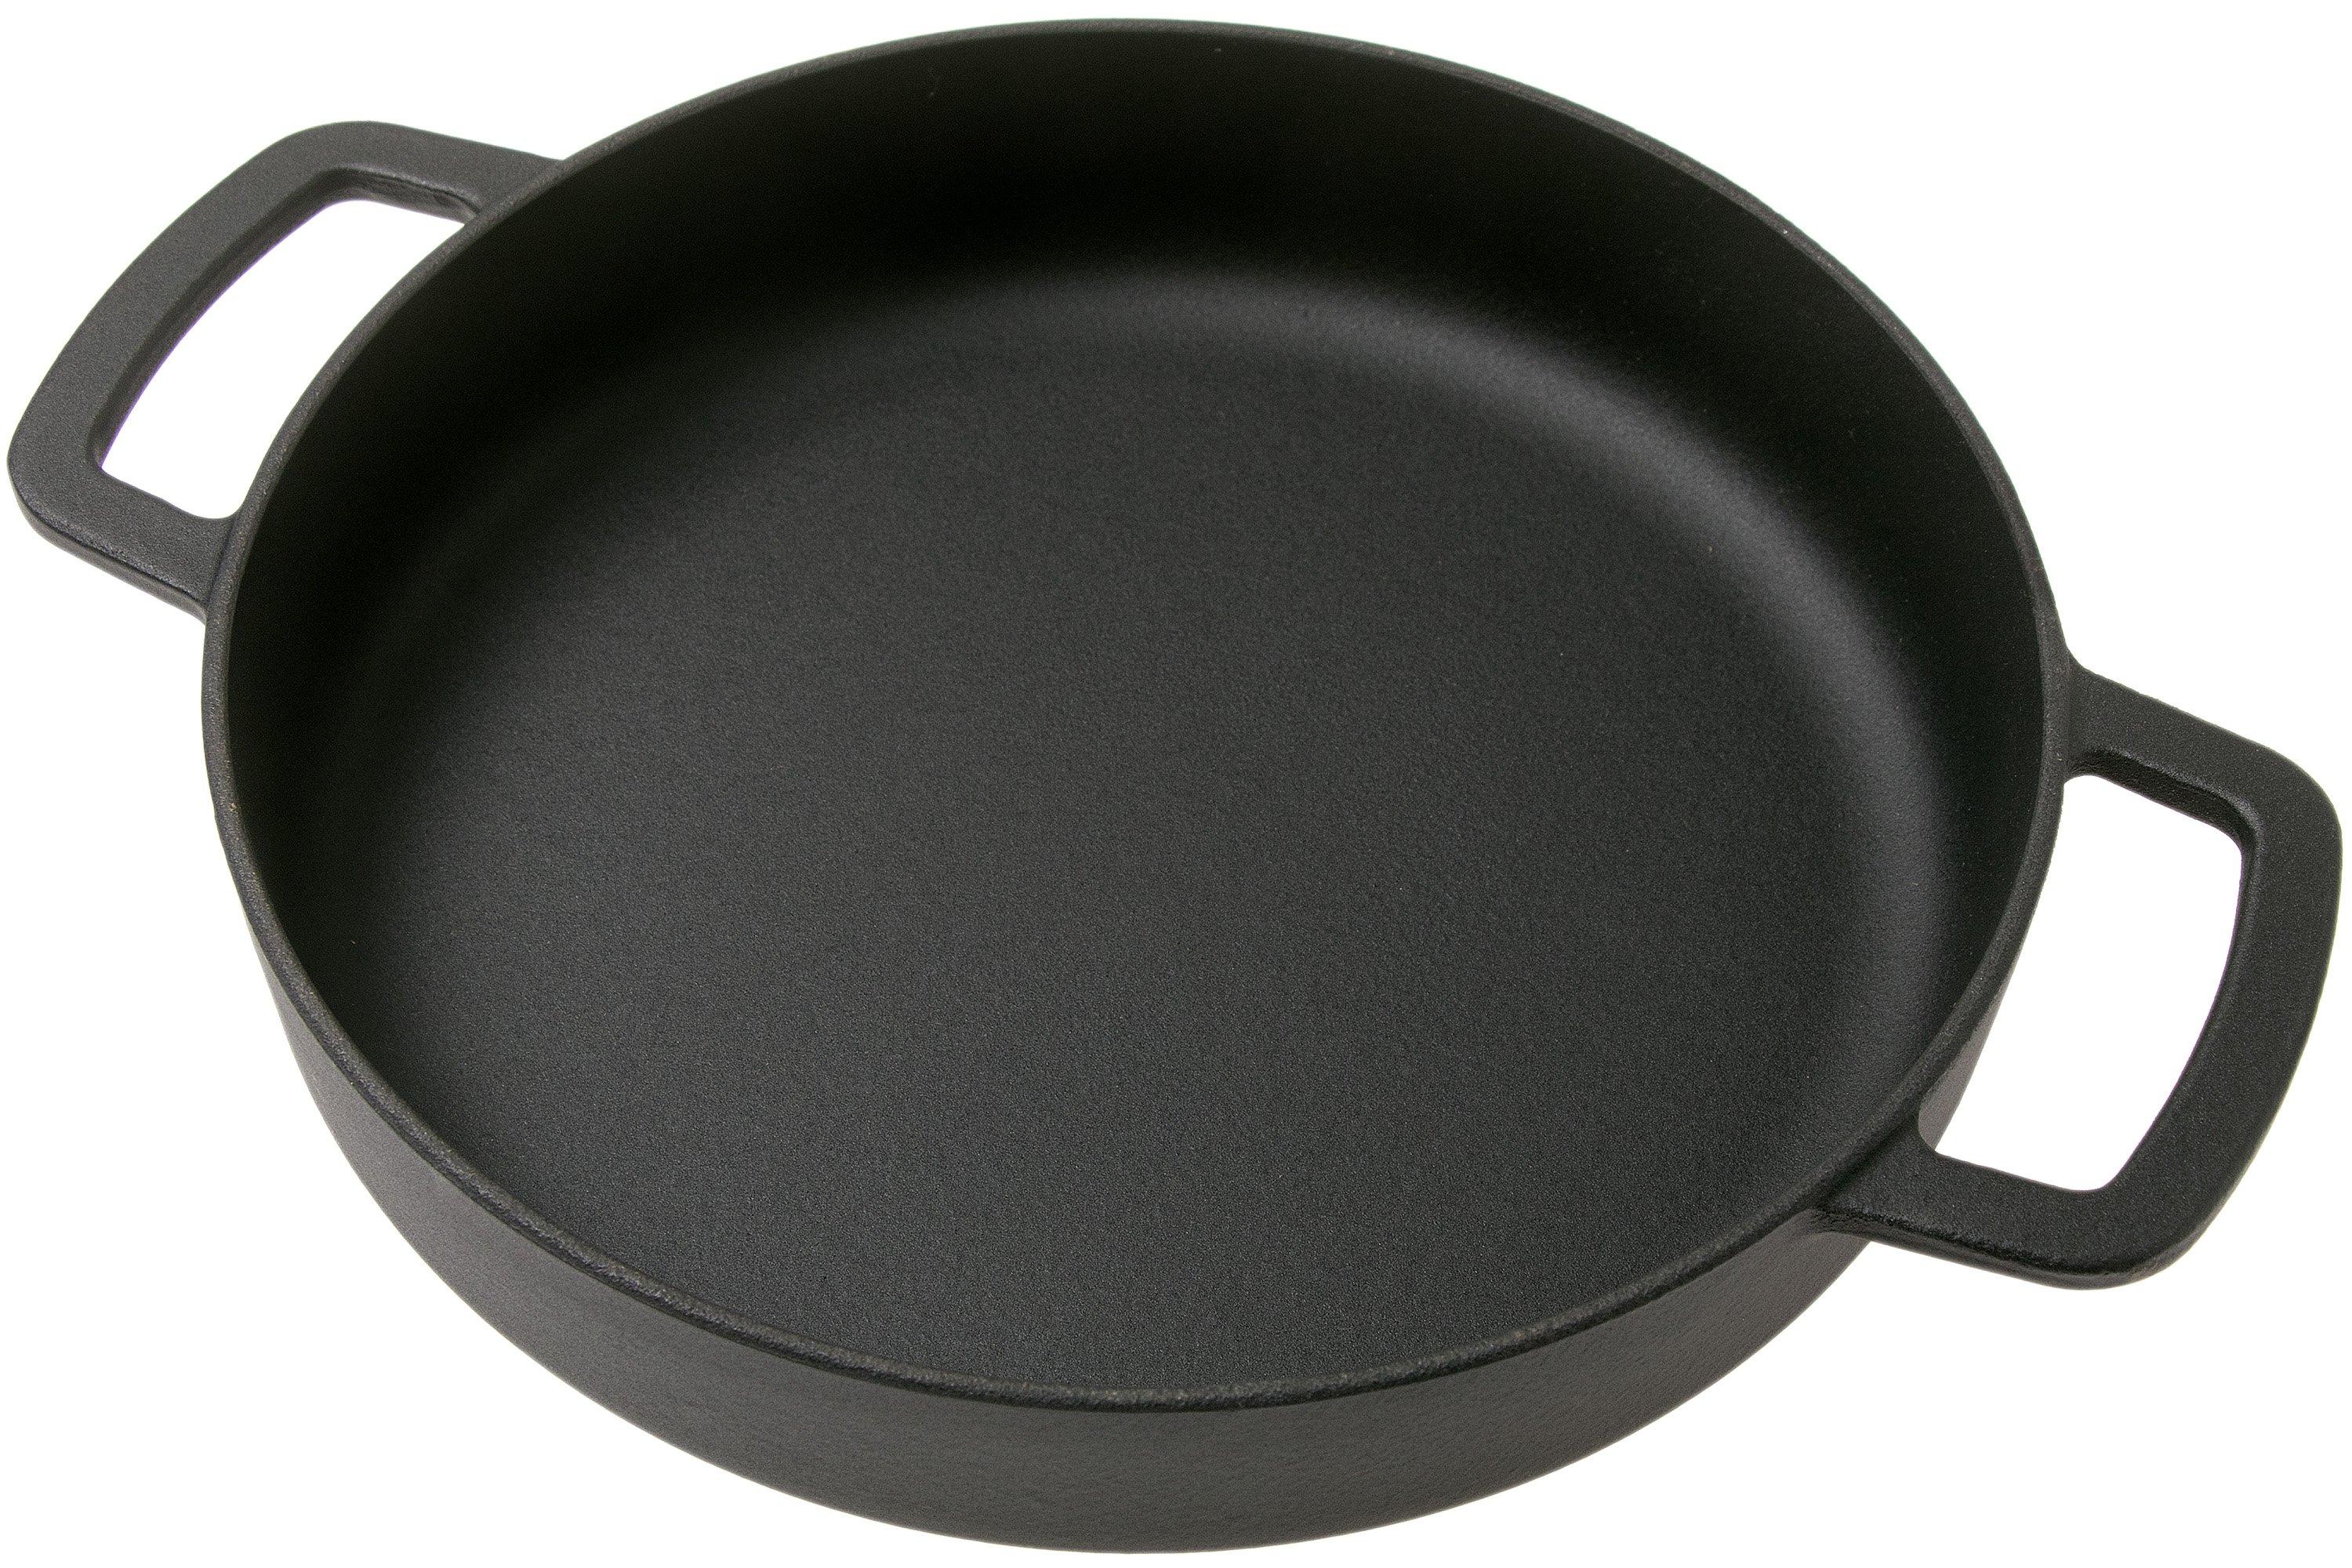 Onafhankelijk voorzichtig gesprek Combekk Sous Chef 192124BL frying pan with double handle 24 cm, black |  Advantageously shopping at Knivesandtools.com